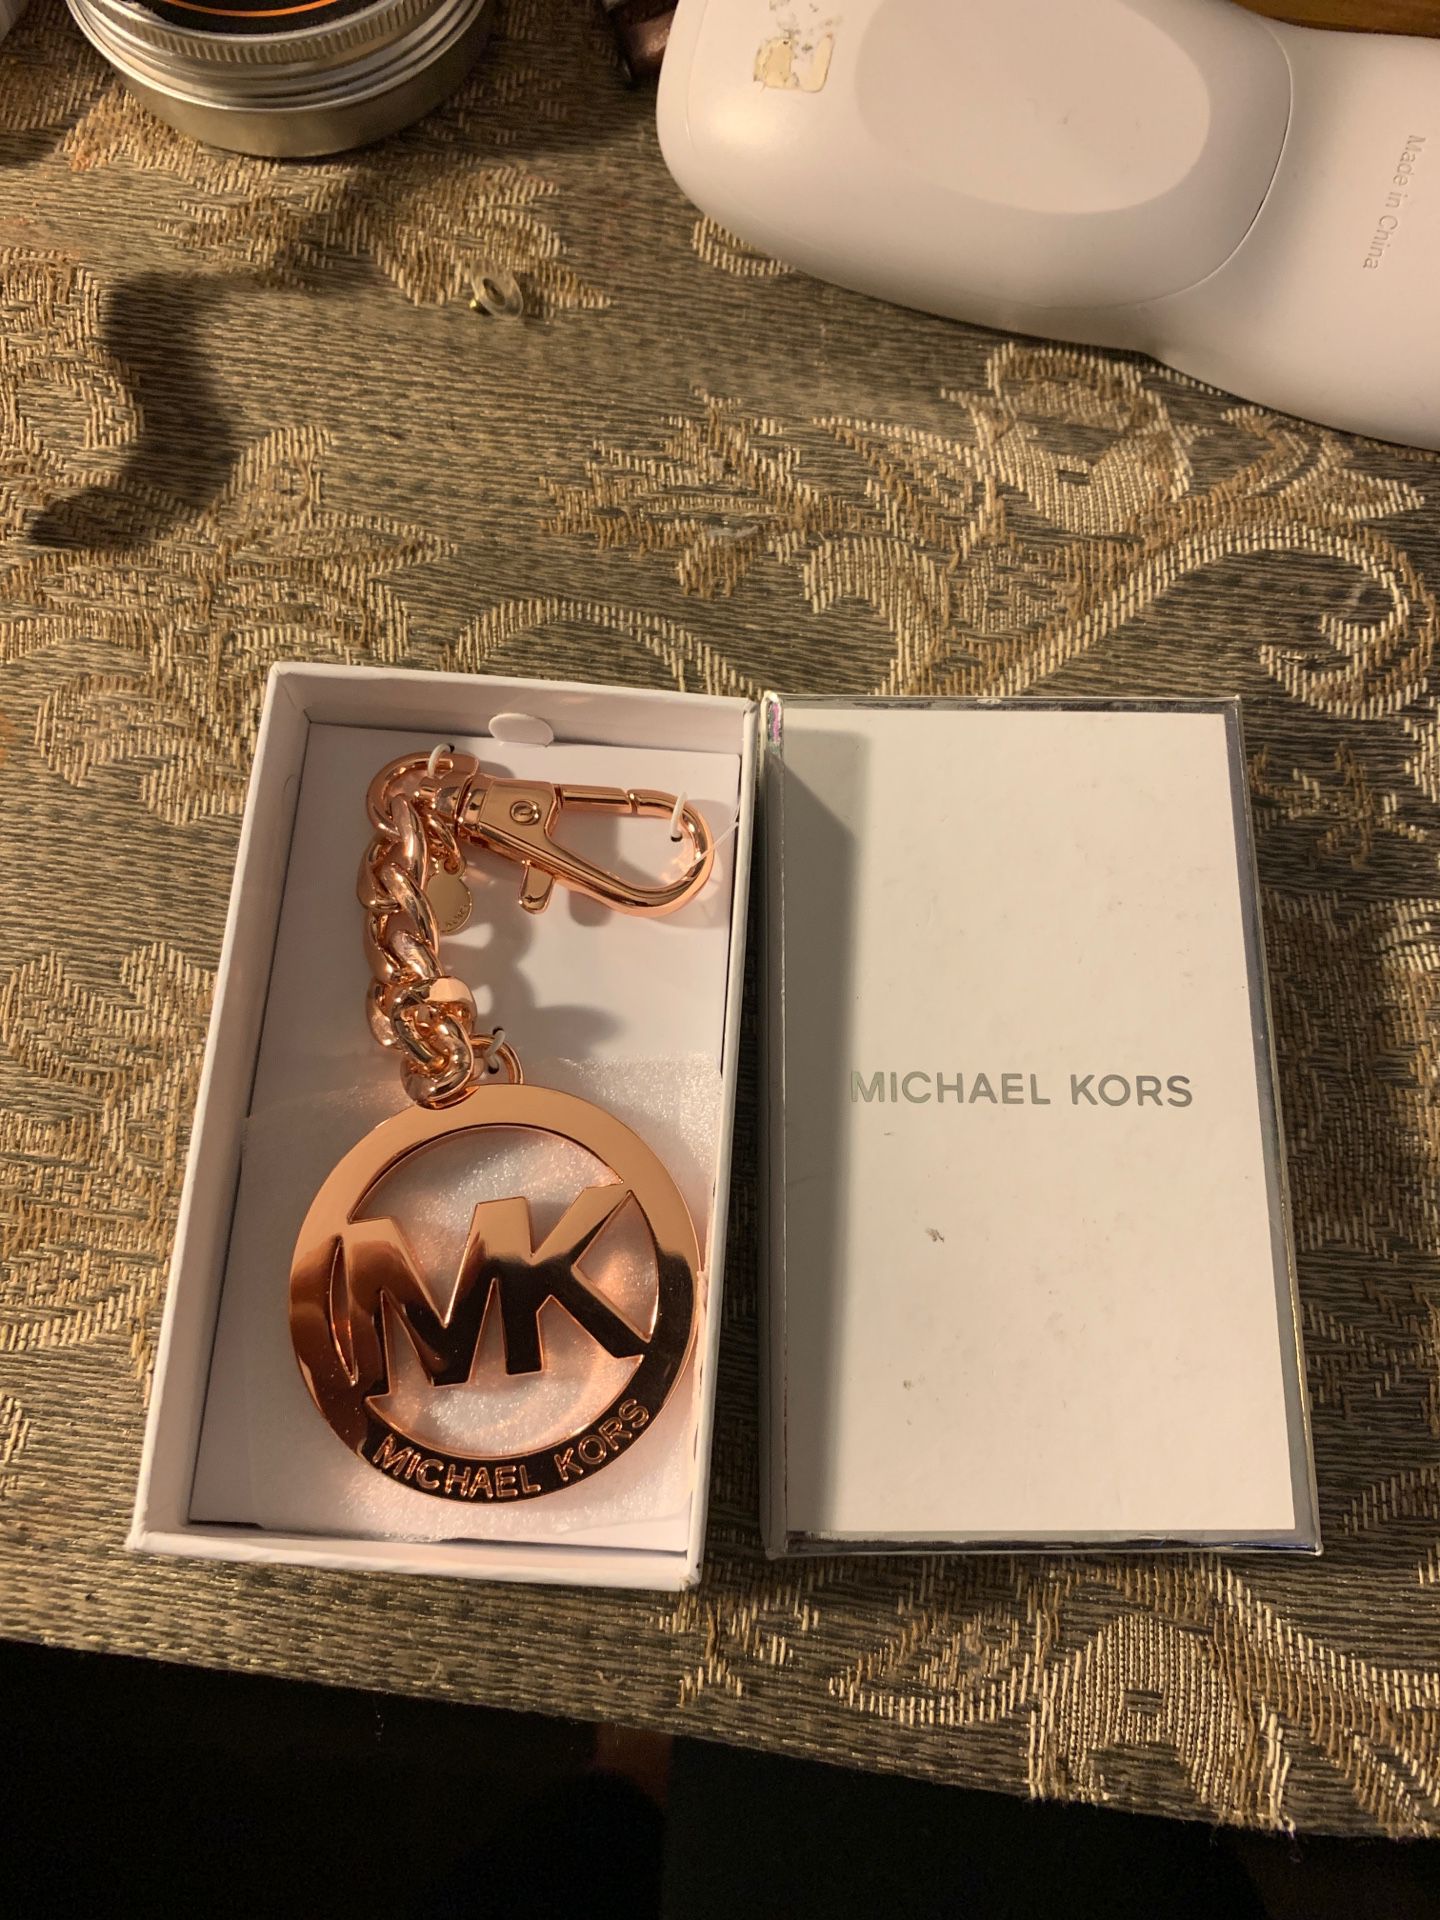 Michael kors rose gold key chain